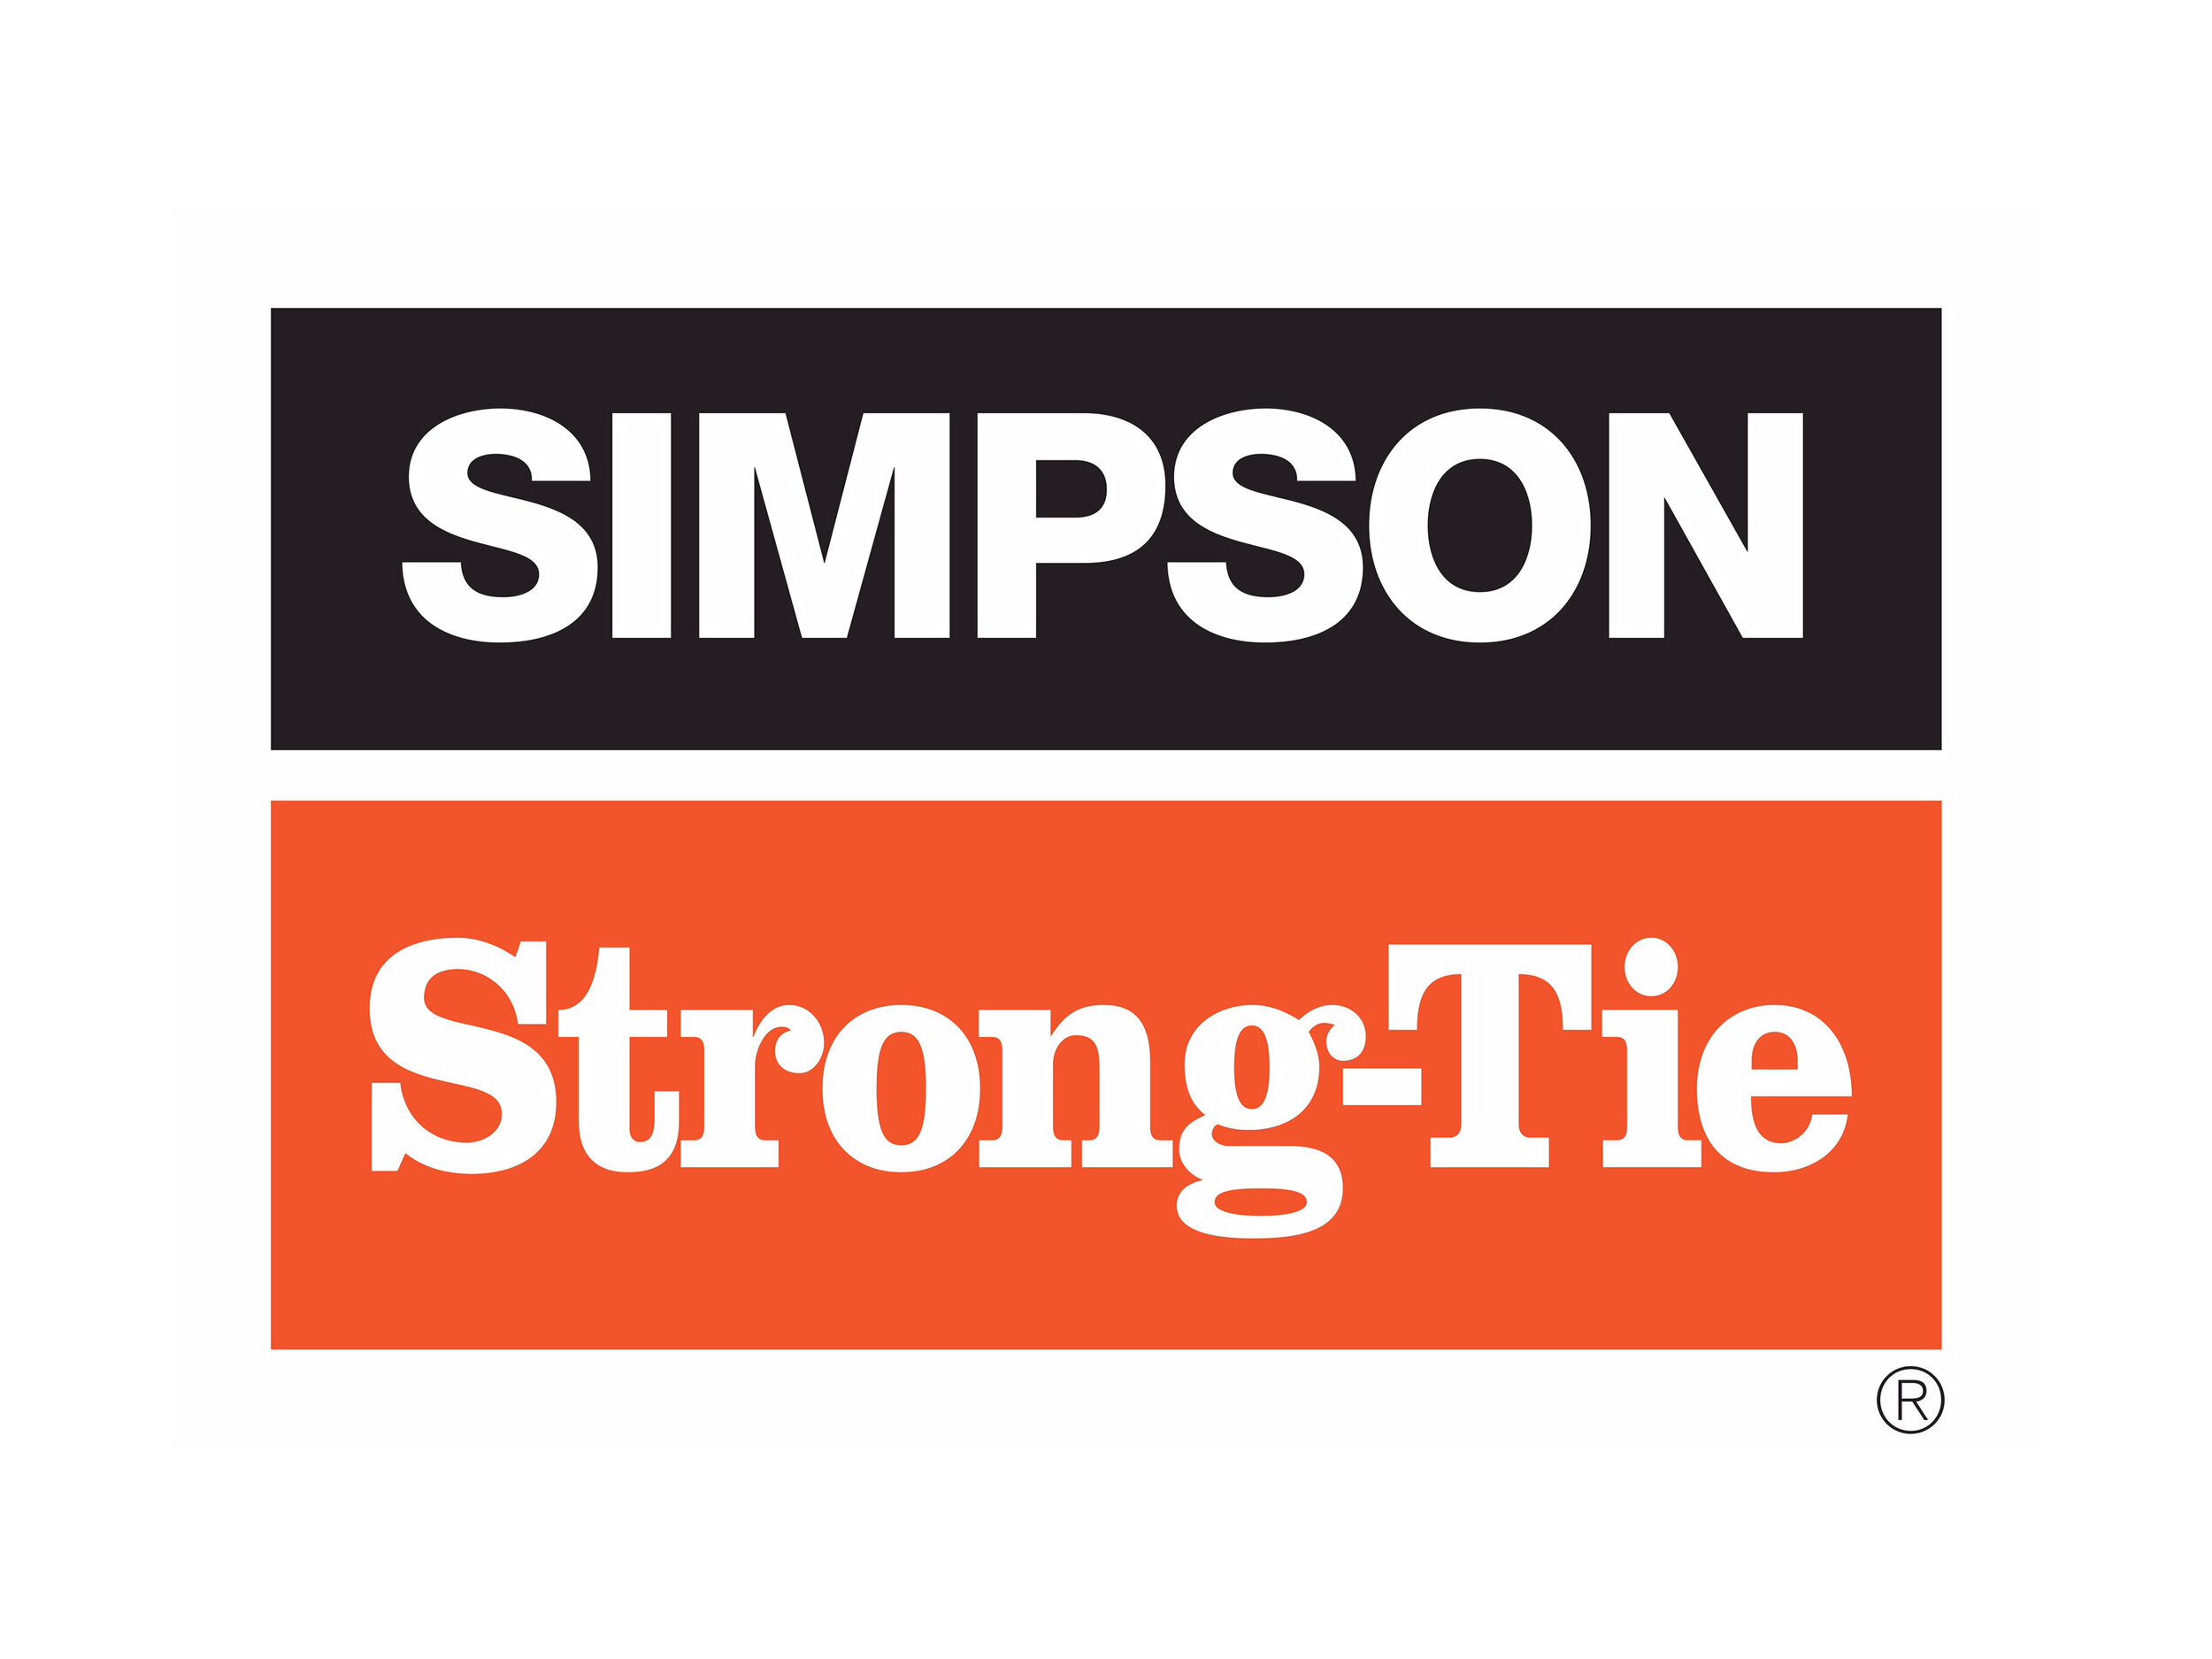 Simspon+Strong+Tie+2018.jpg